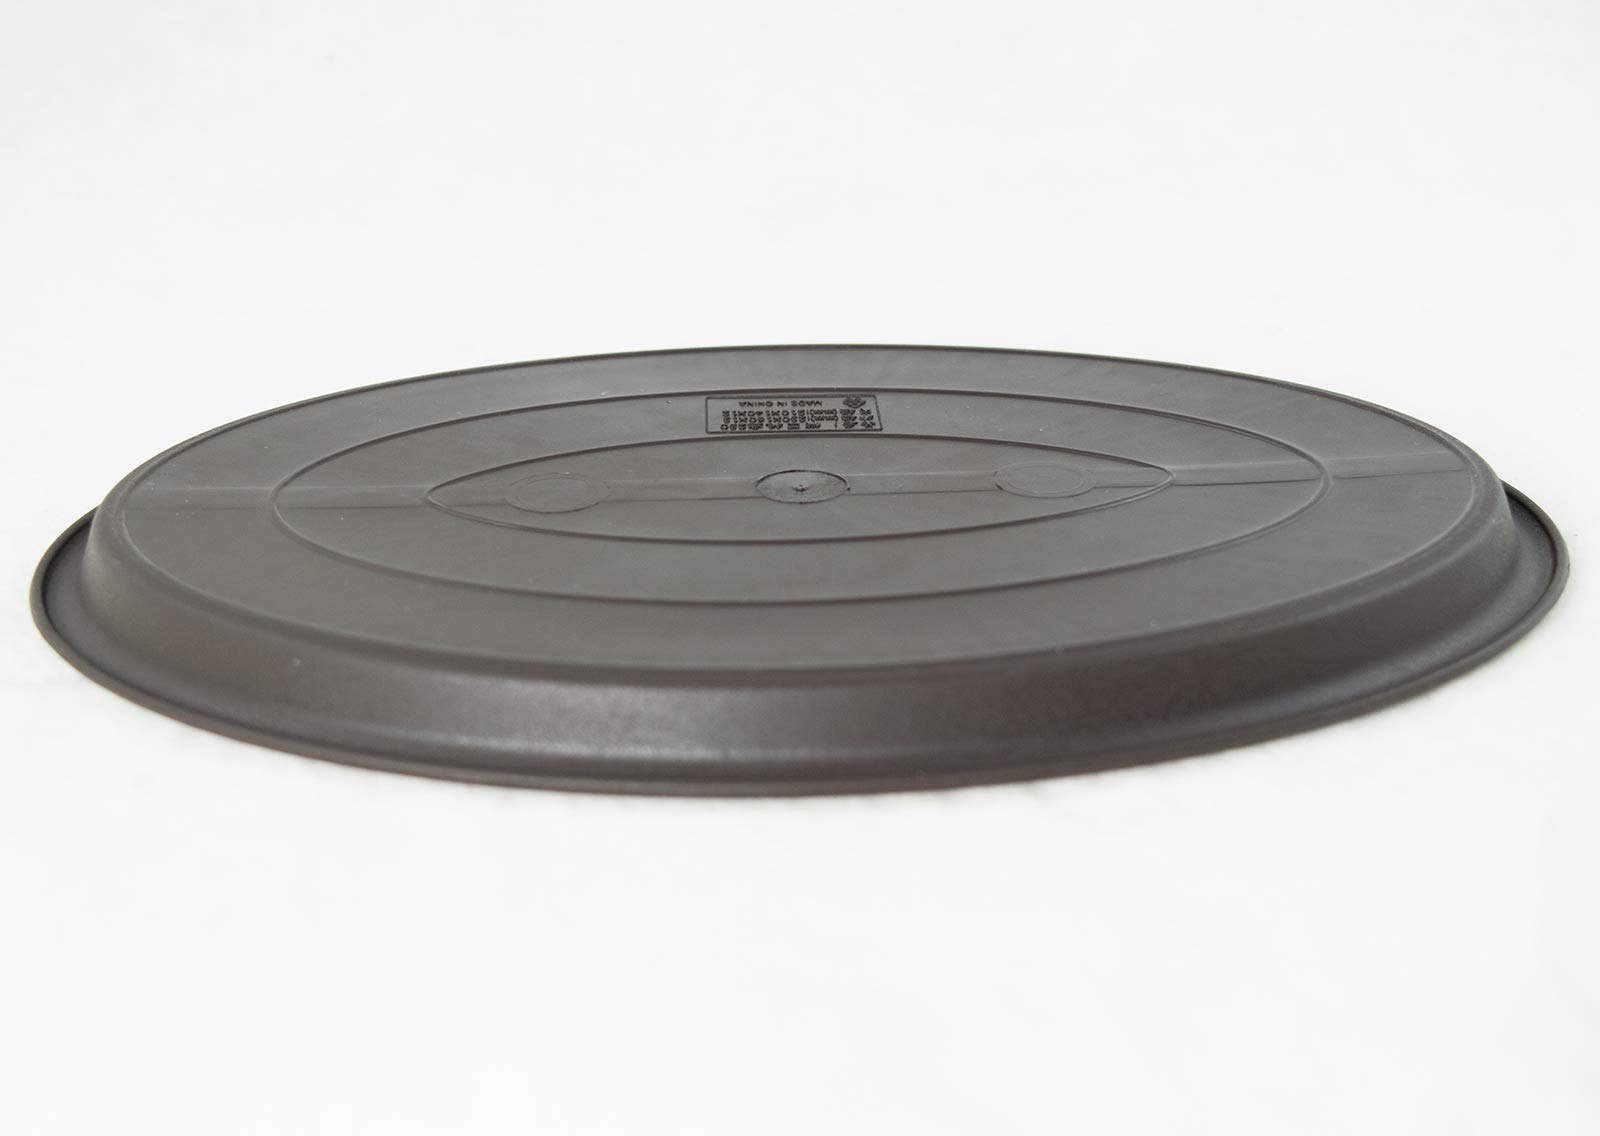 Oval Plastic Humidity/Drip Tray for Bonsai Tree 14"x 9.75"x 0.5"- Brown